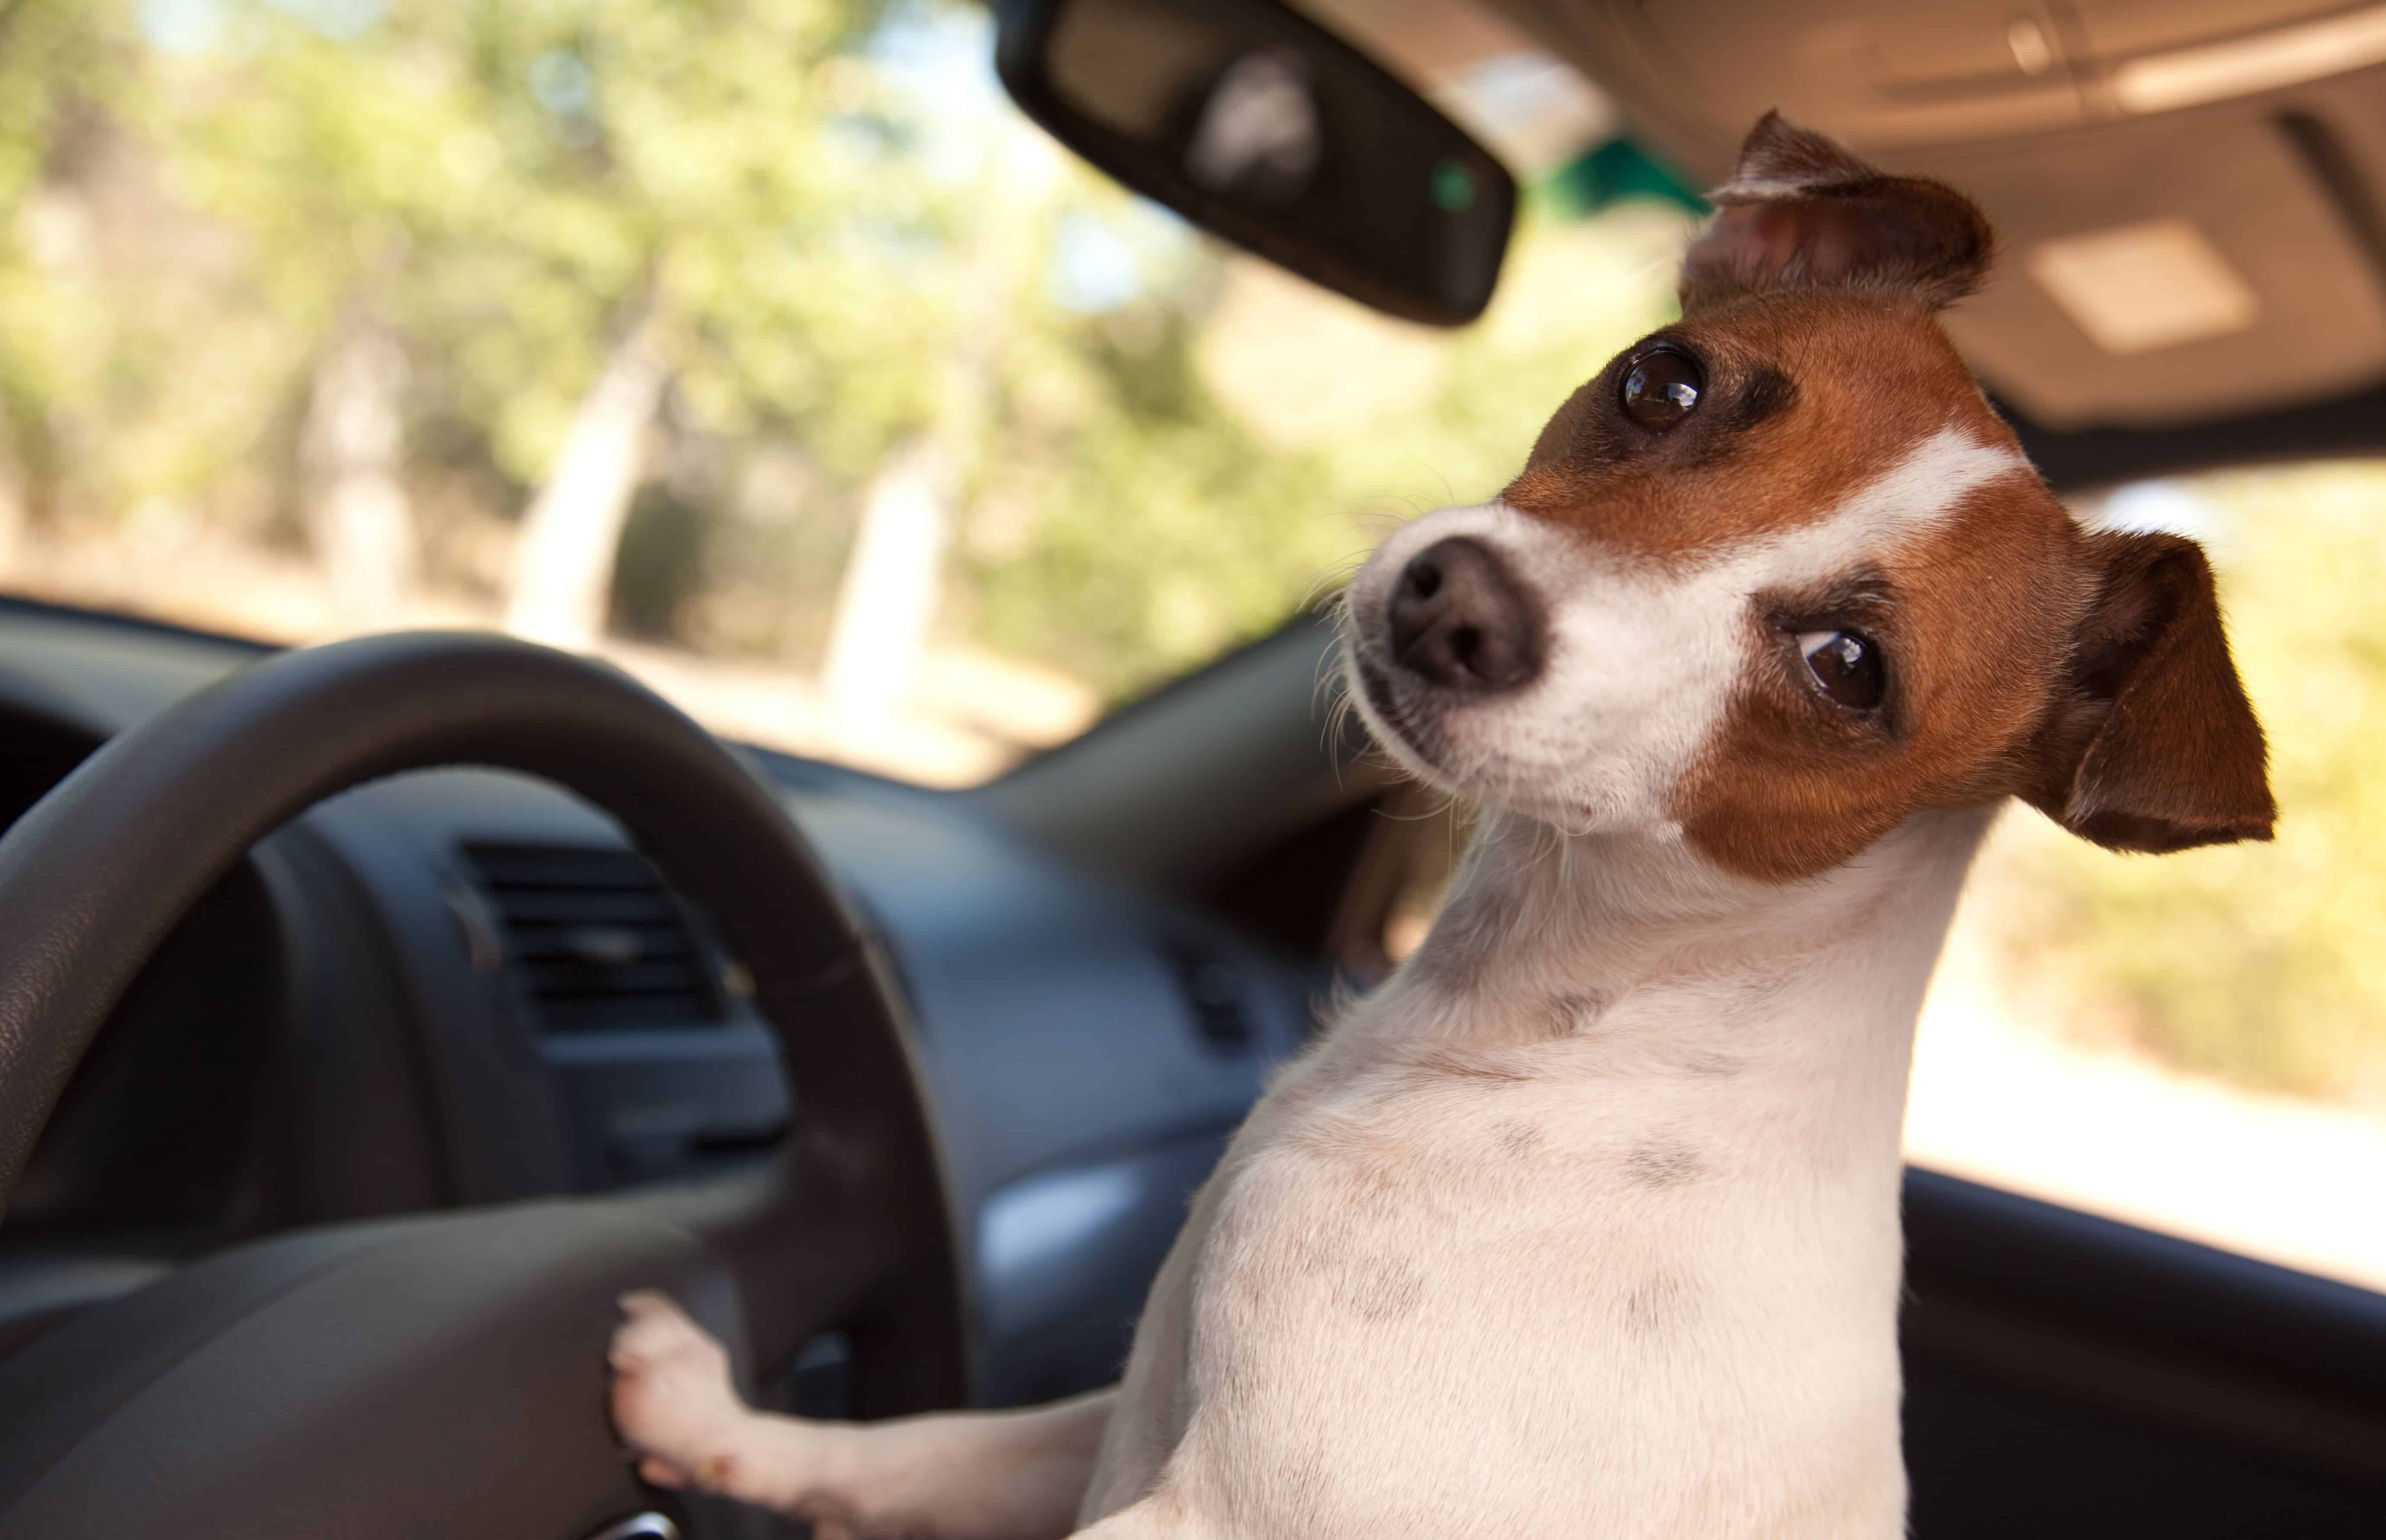 Jack Russell Terrier inside a car.